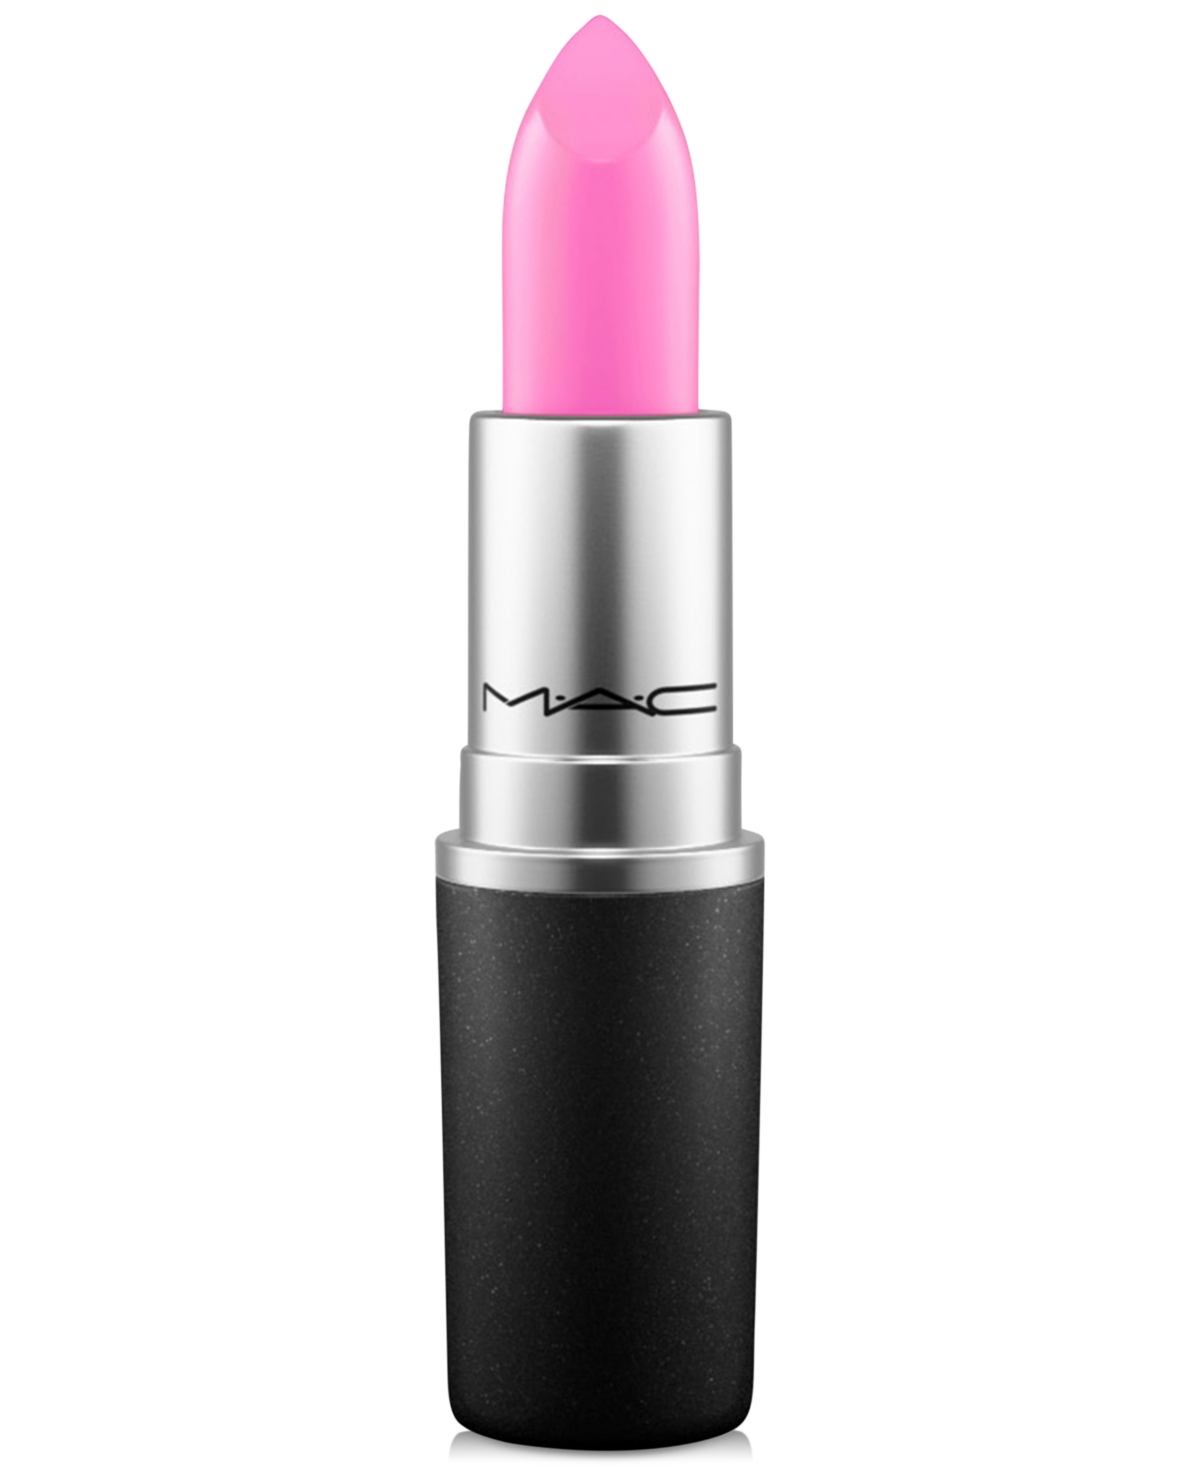 Mac Amplified Lipstick In Saint Germain